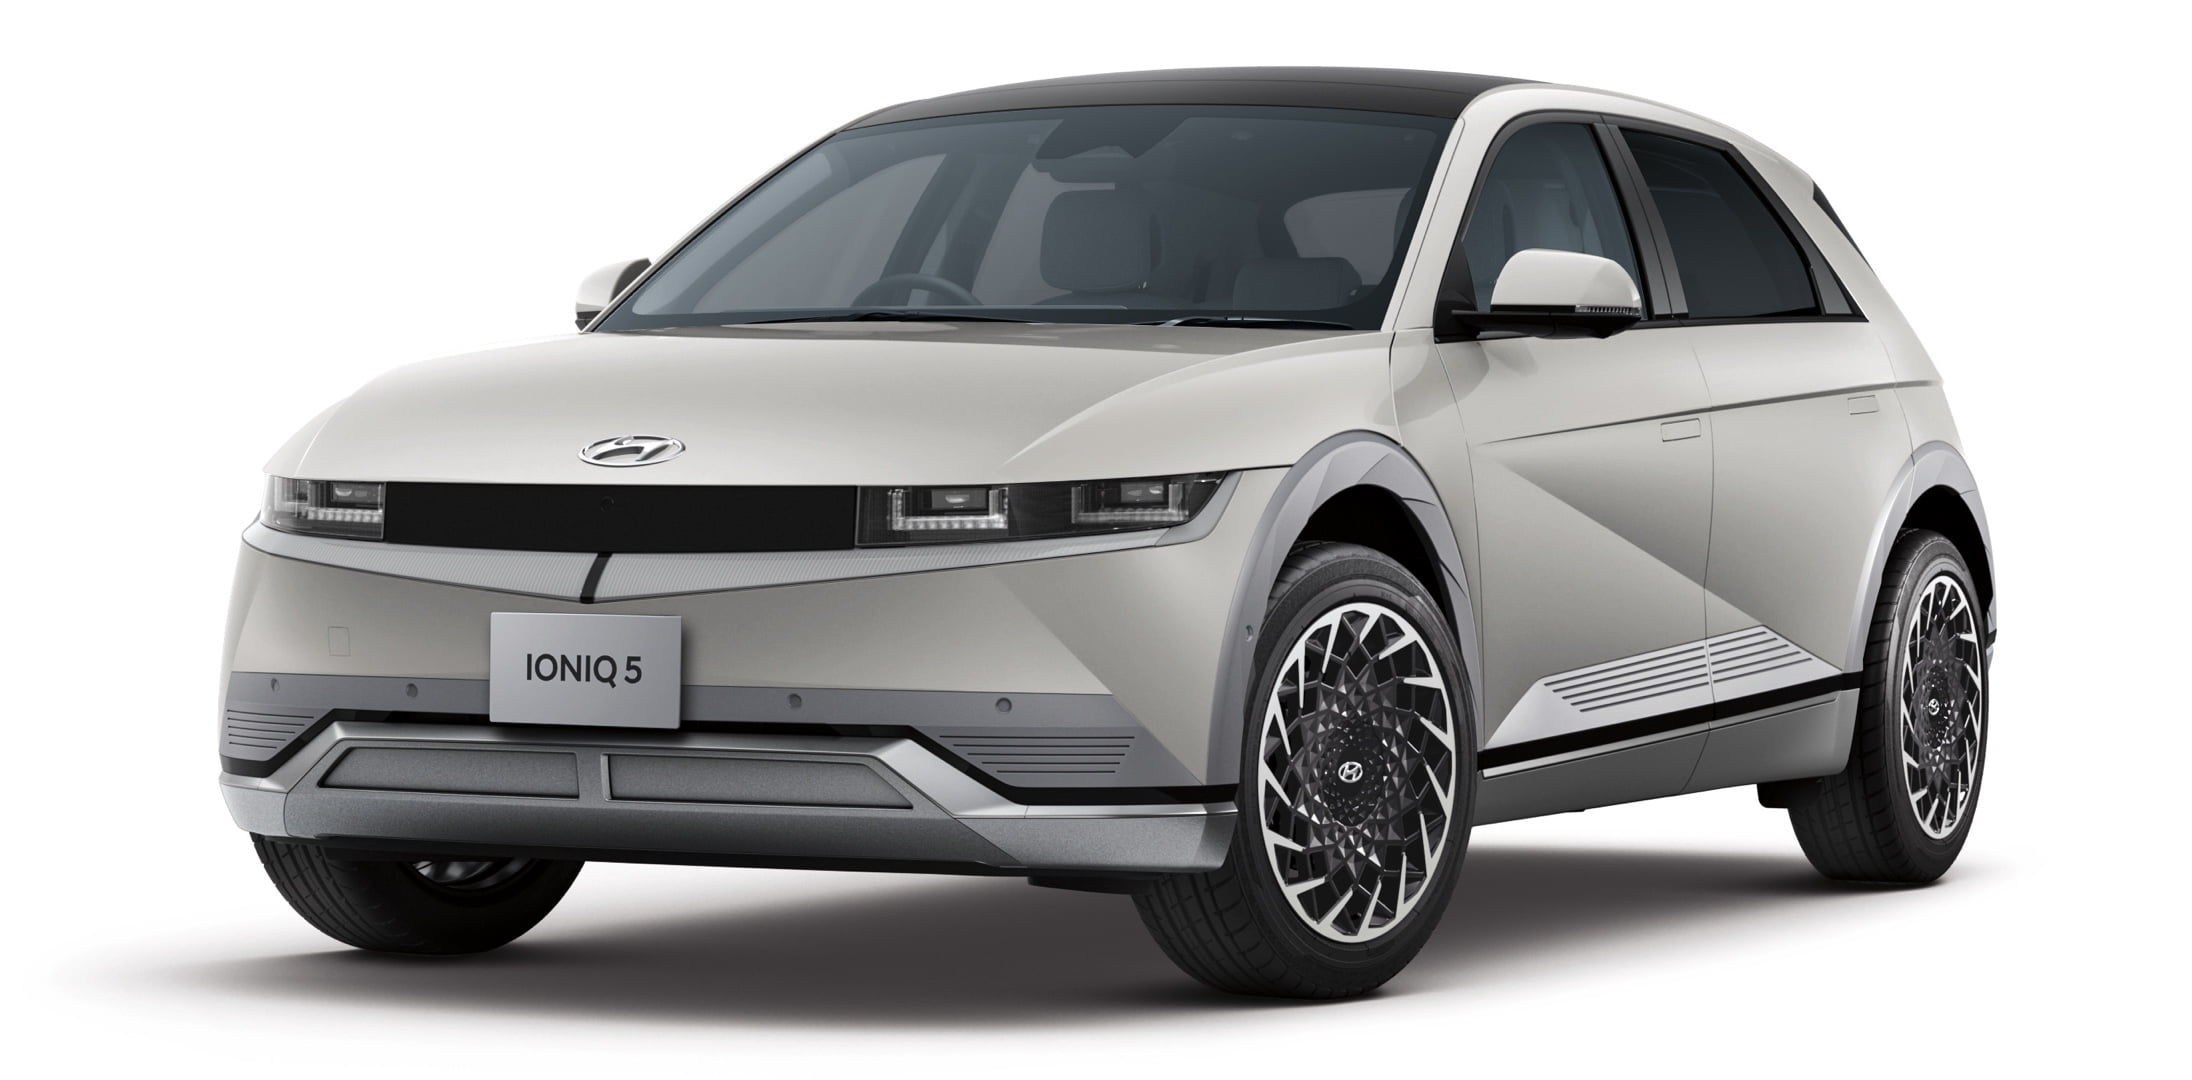 IONIQ 5 (アイオニック 5) 電気自動車 EV 新しいモビリティ- Hyundai Mobility Japan (ヒョンデモビリティジャパン)